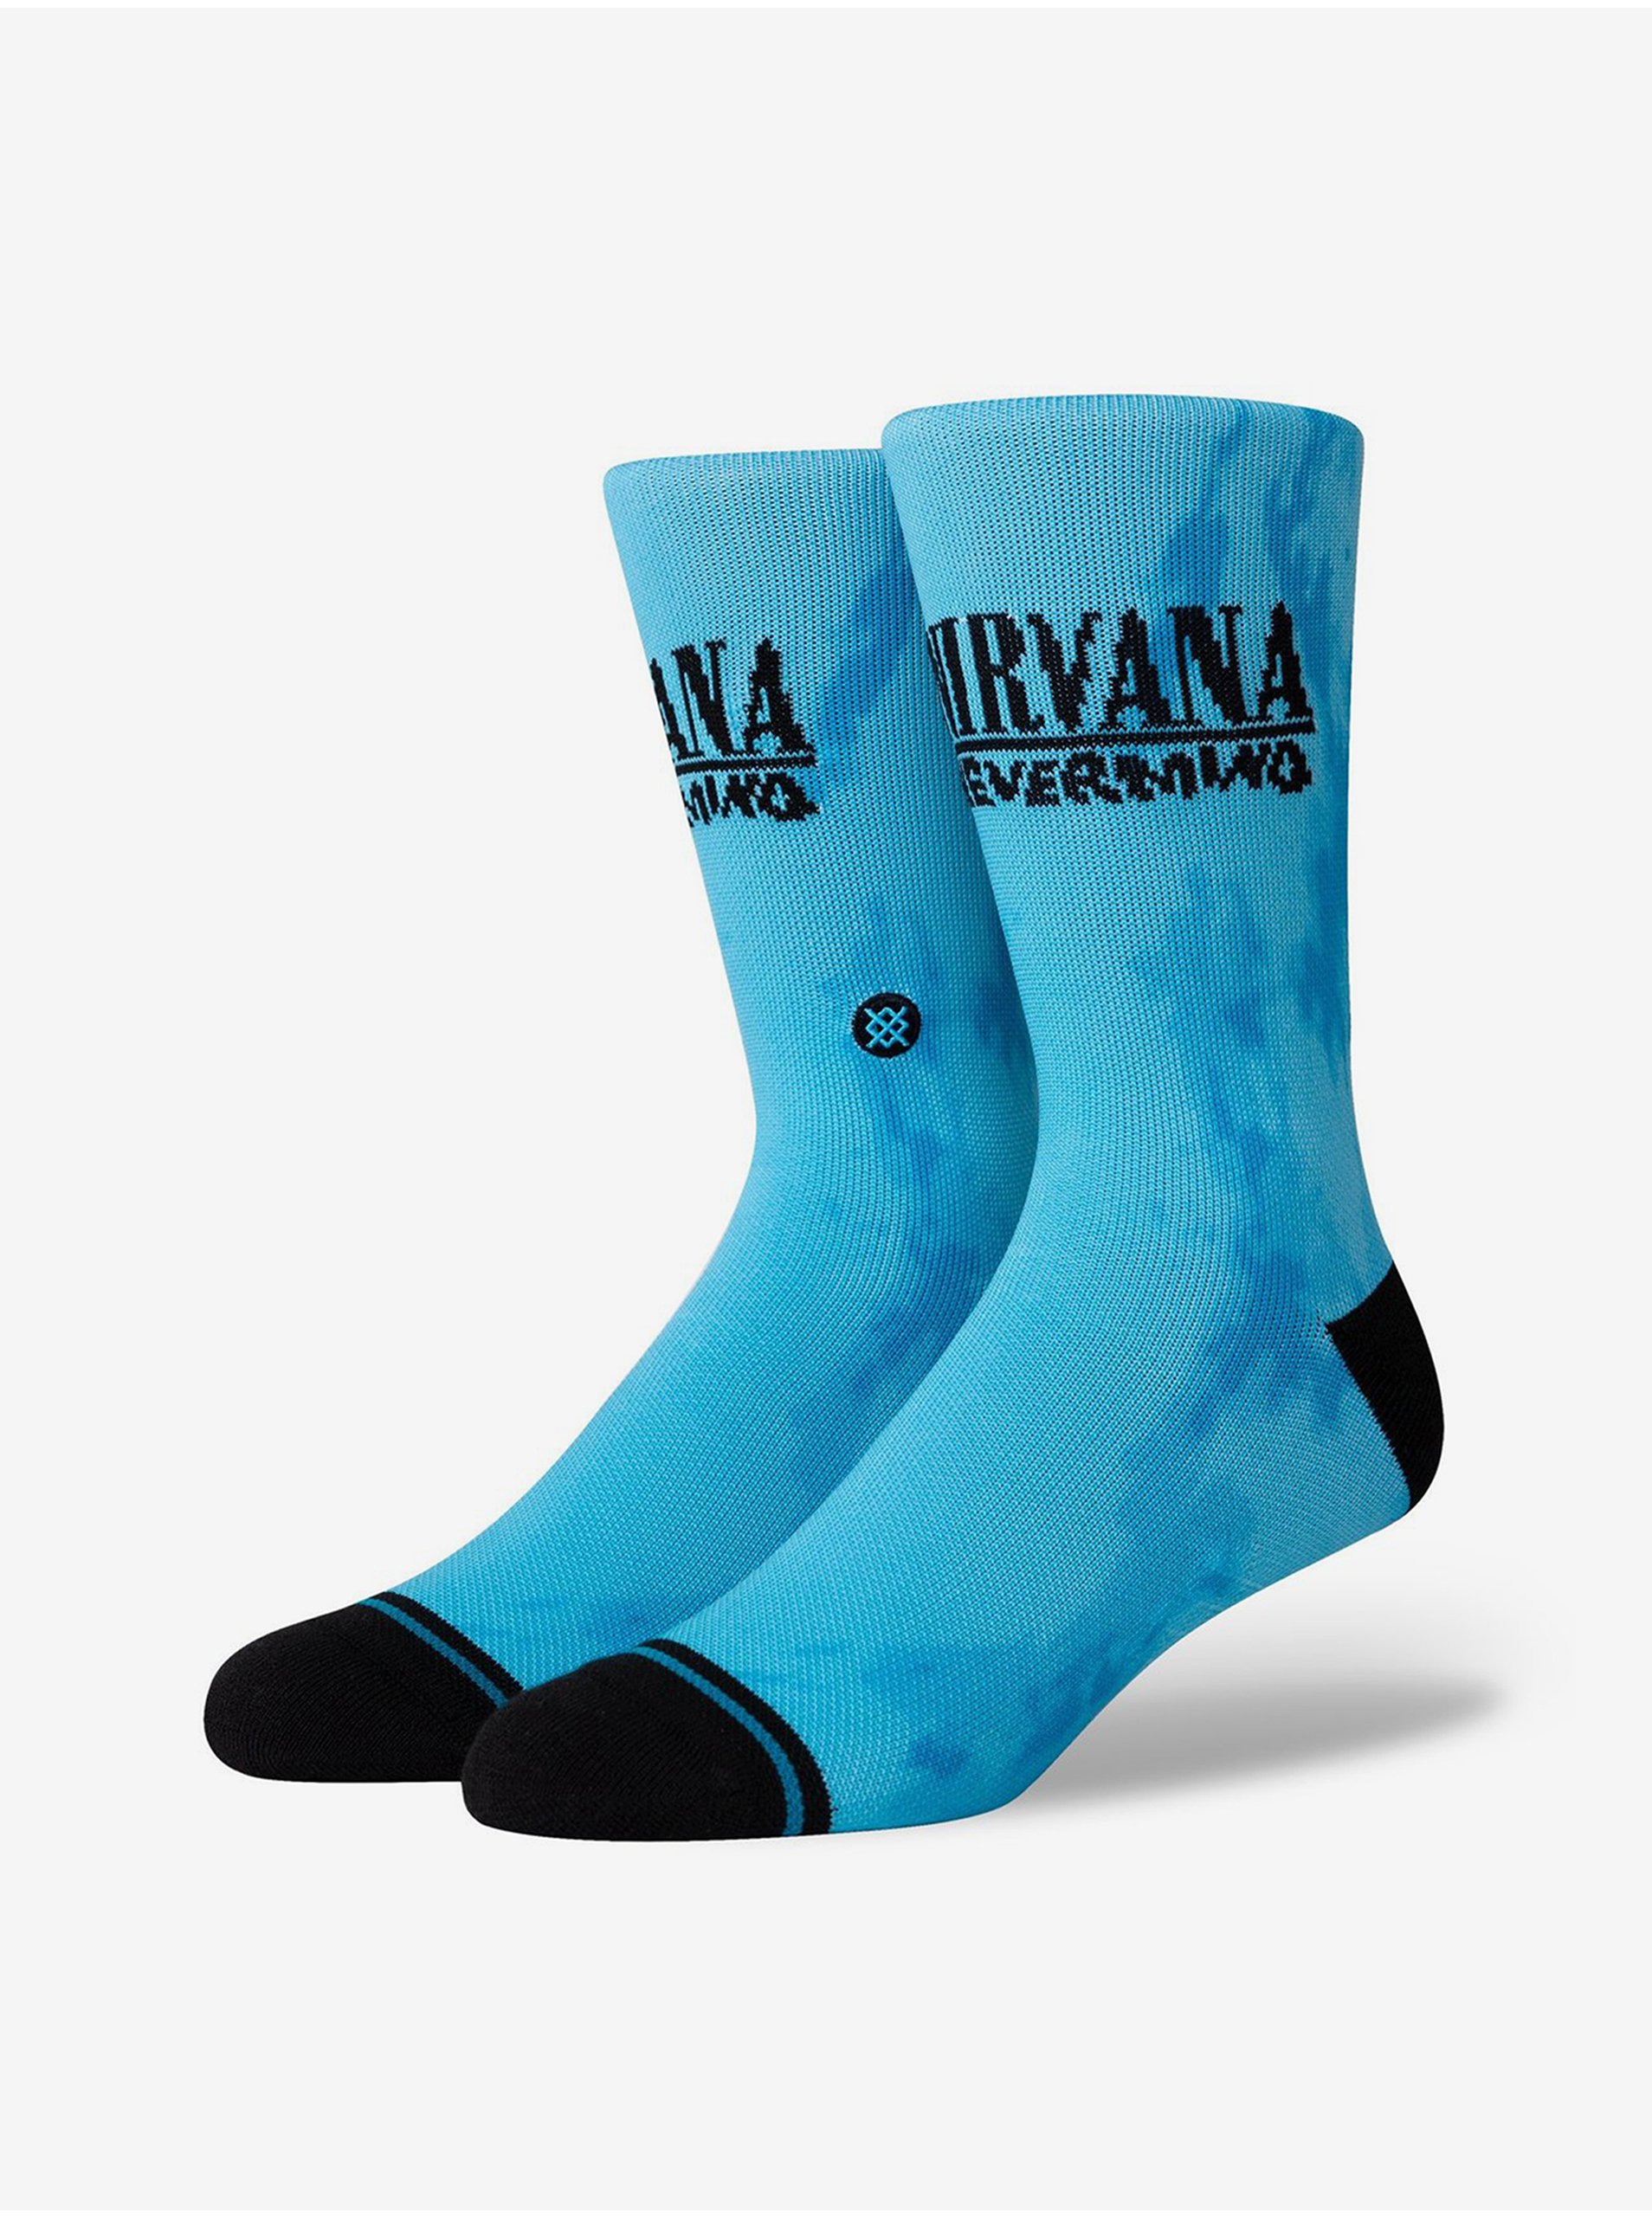 Lacno Modré unisex vzorované ponožky Stance Nirvana Nevermind